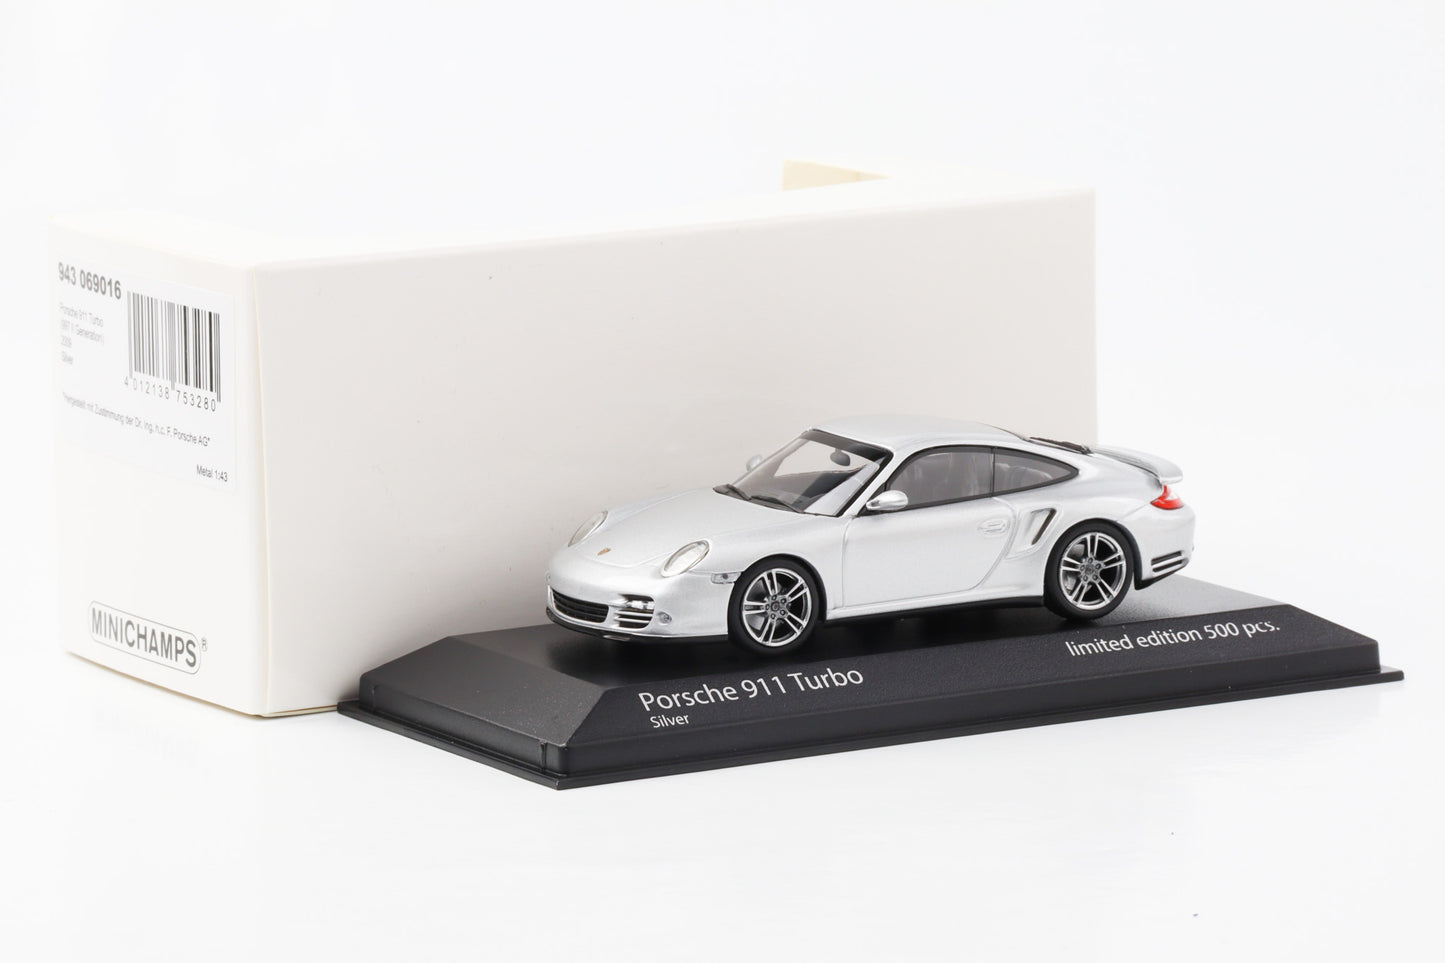 1:43 Porsche 911 turbo 997 II 2009 silver Minichamps diecast